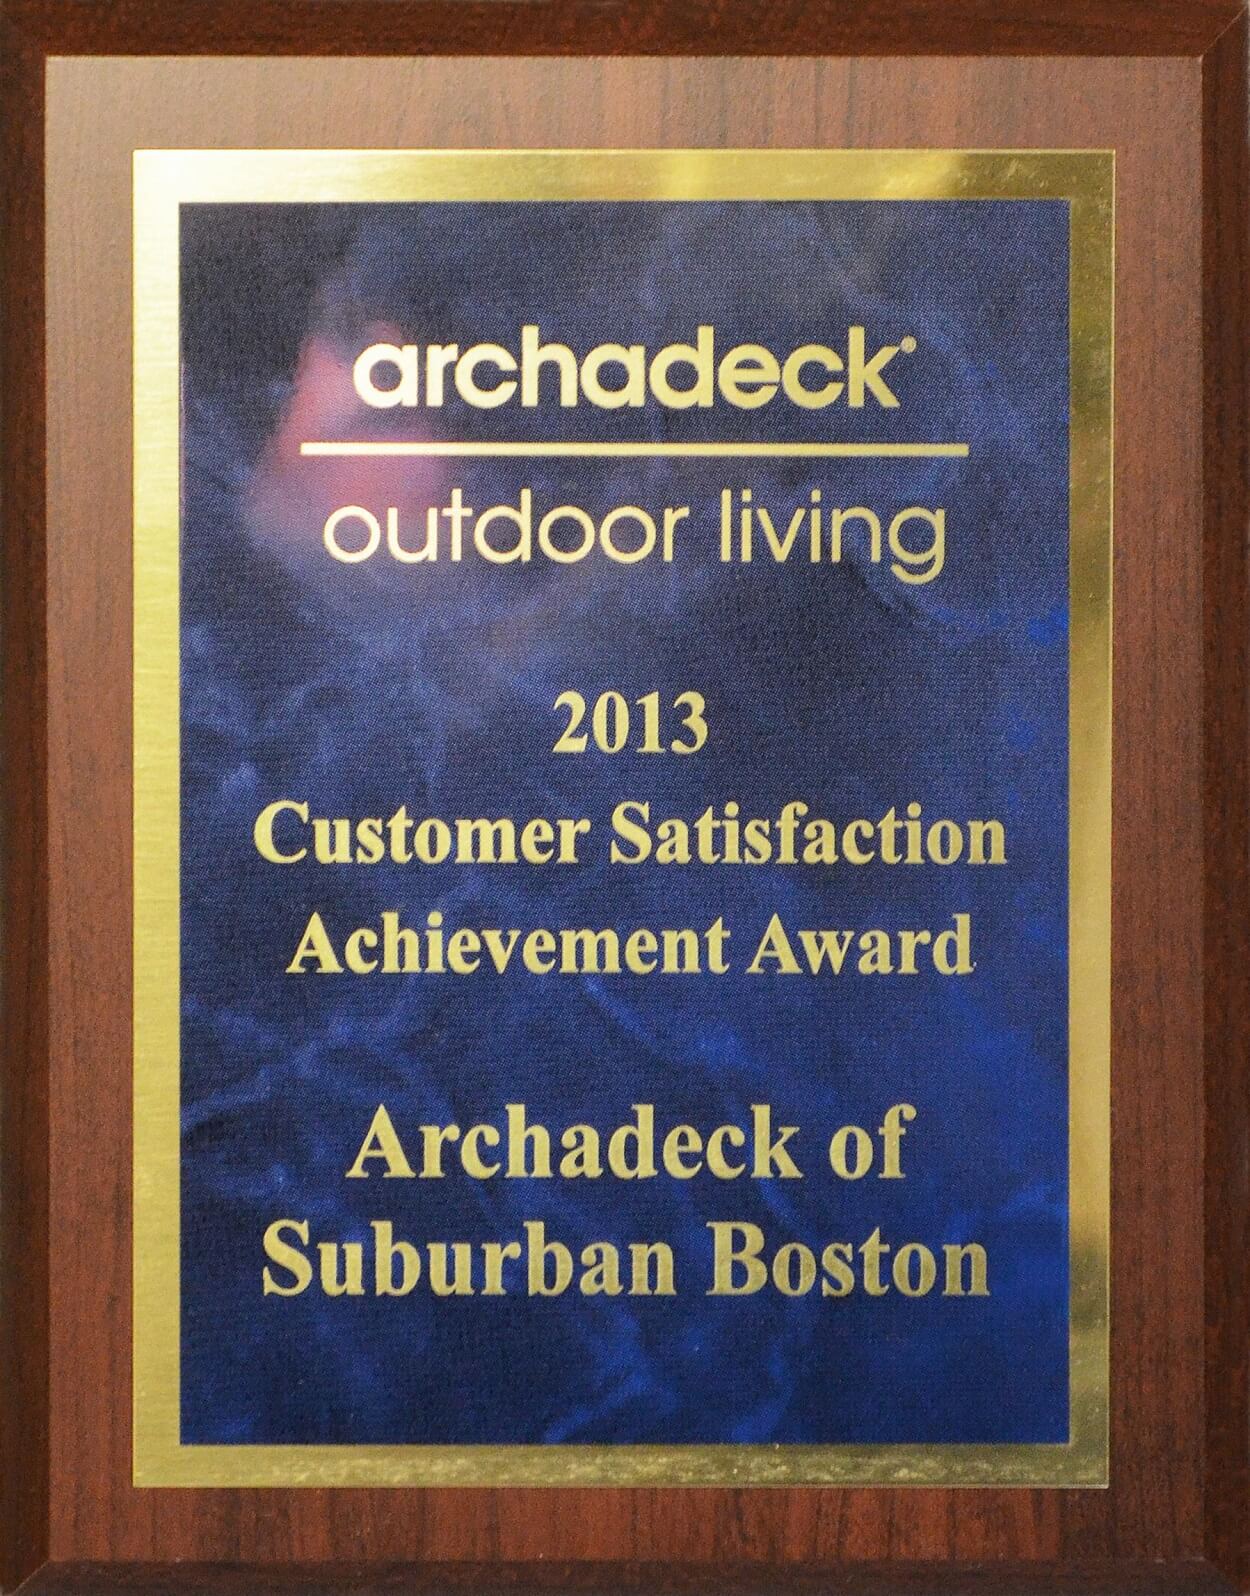 2013 Customer Satisfaction Achievement Award